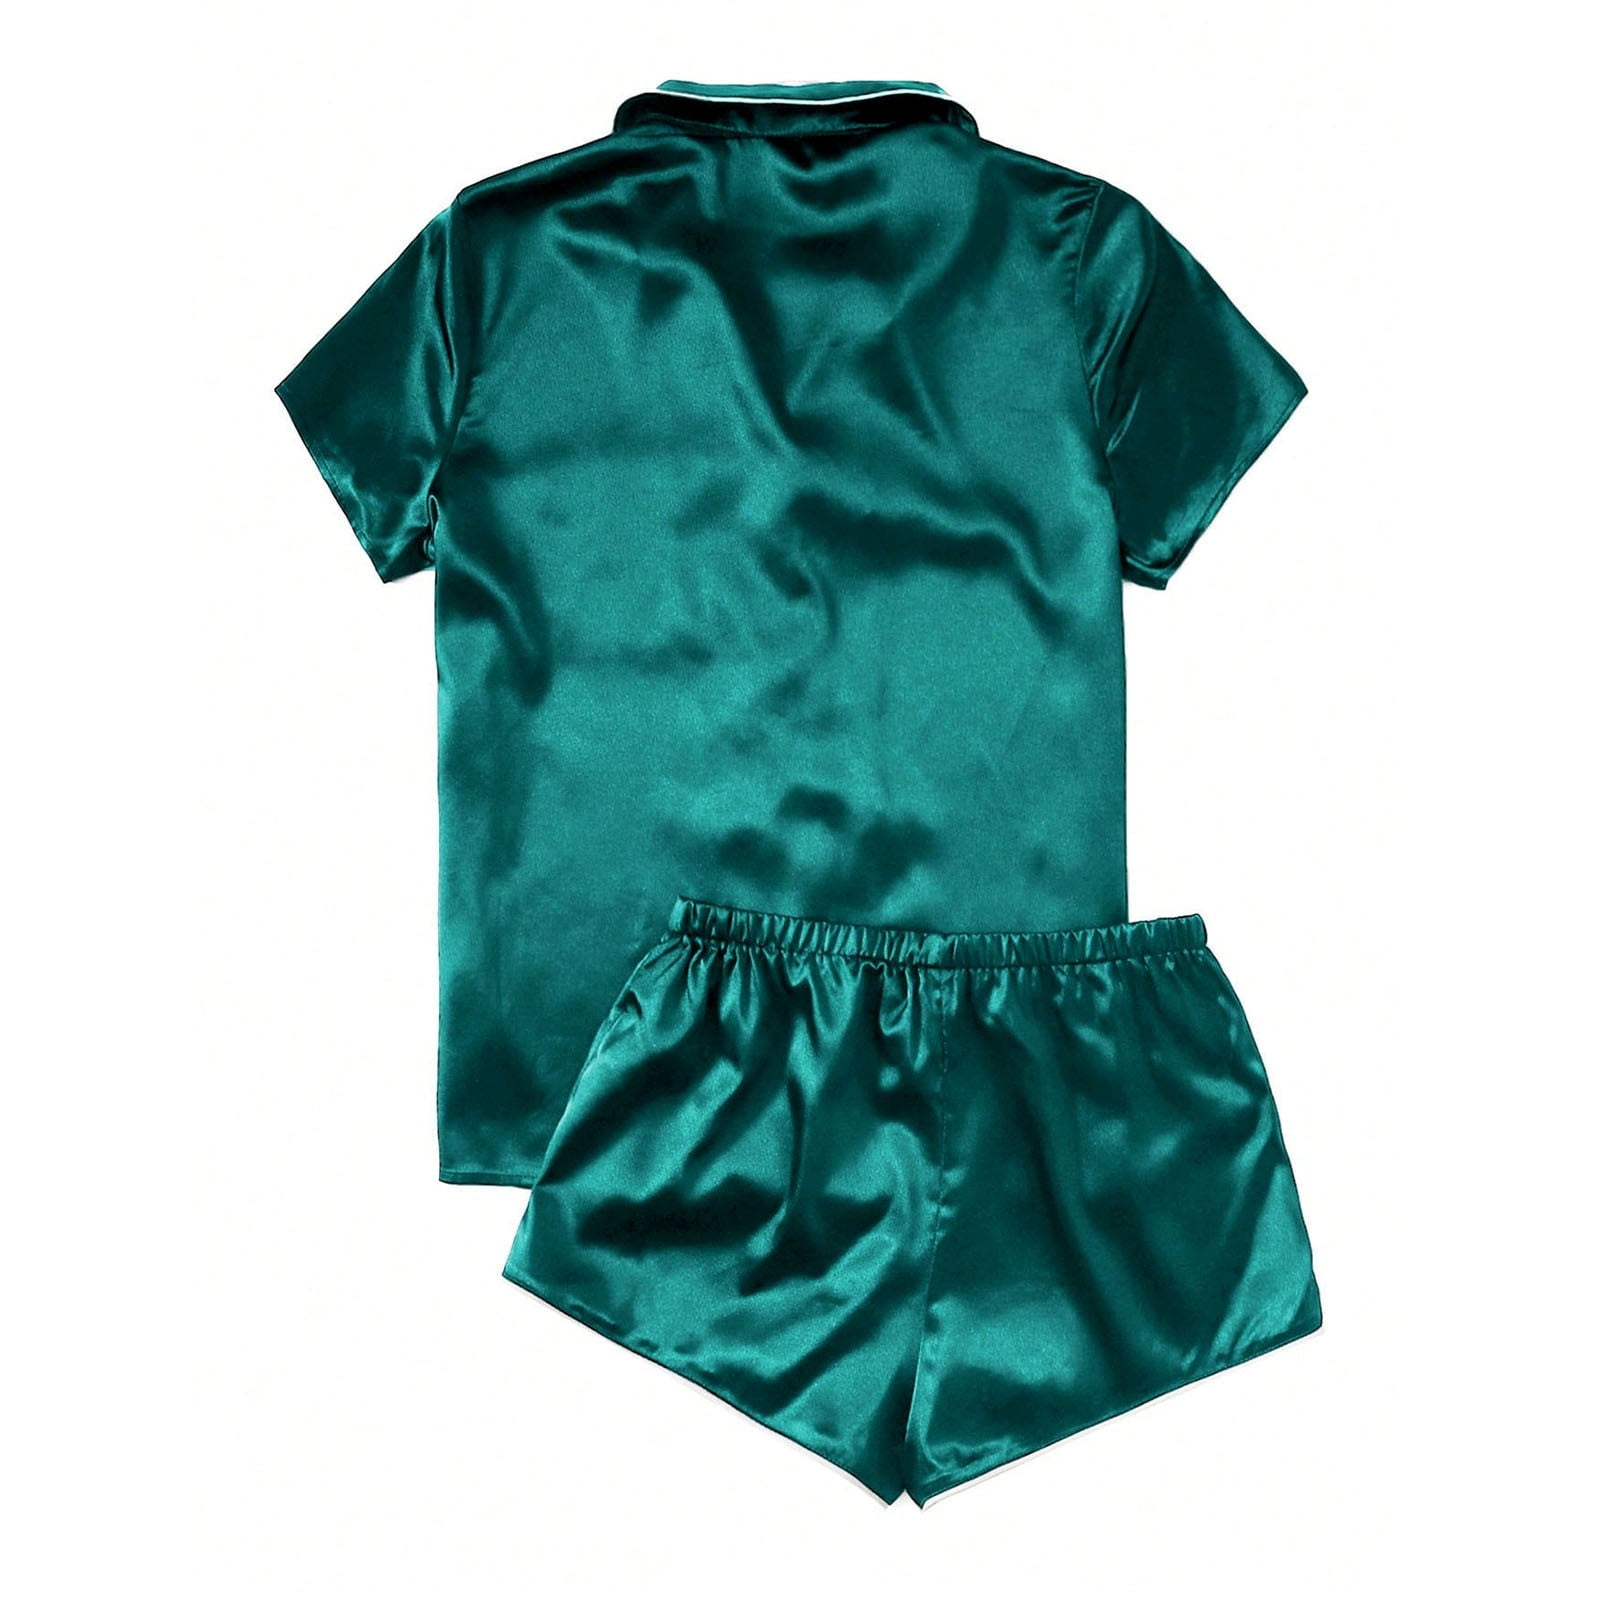 AherBiu Satin Pajamas Sets for Women Short Sleeve Button Down